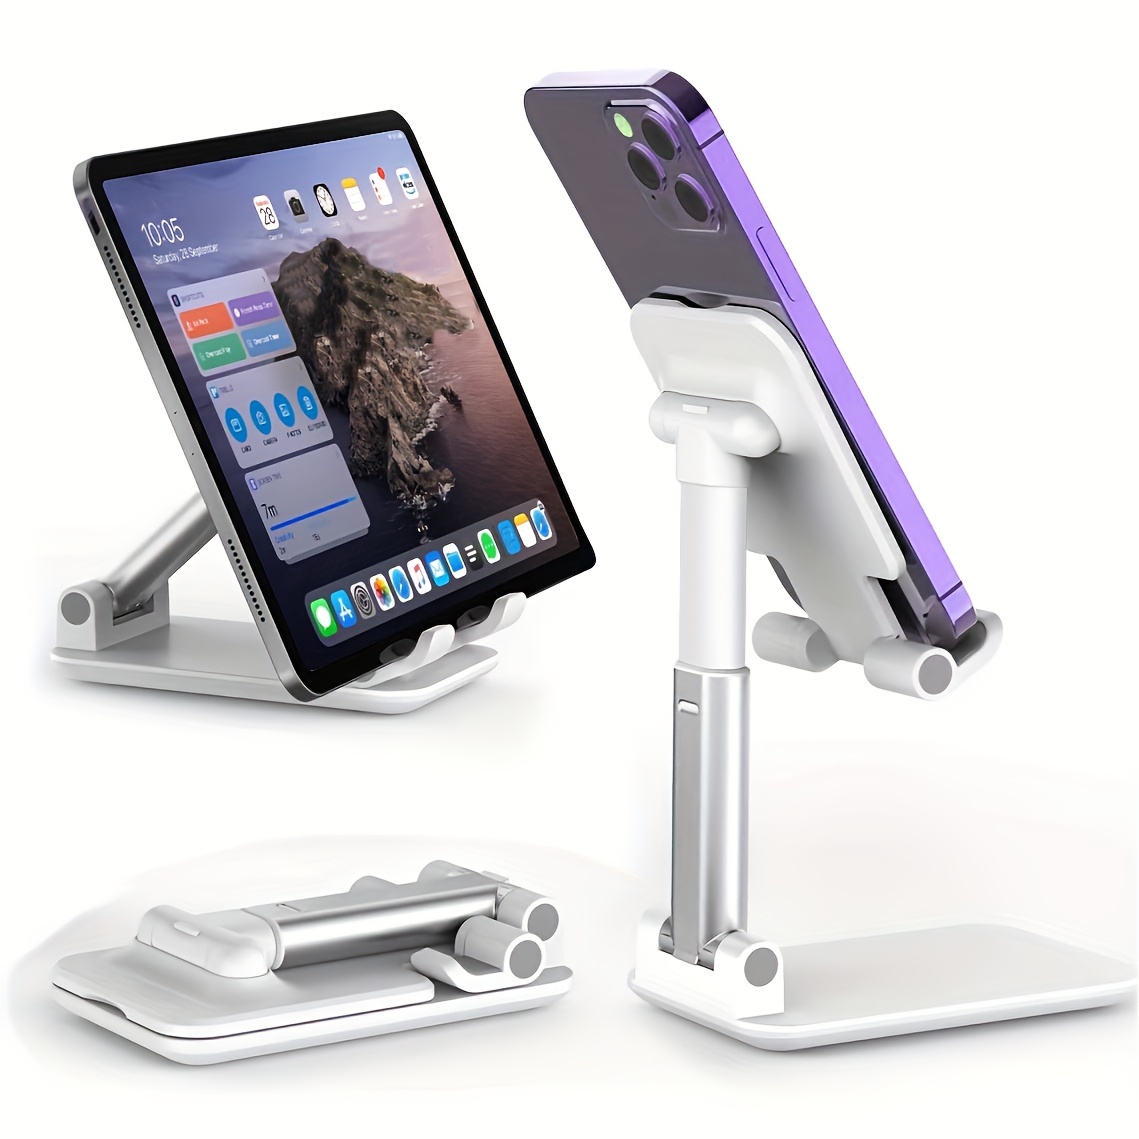 Adjustable height Desk Stand Holder Mobile Phone Folding Portable